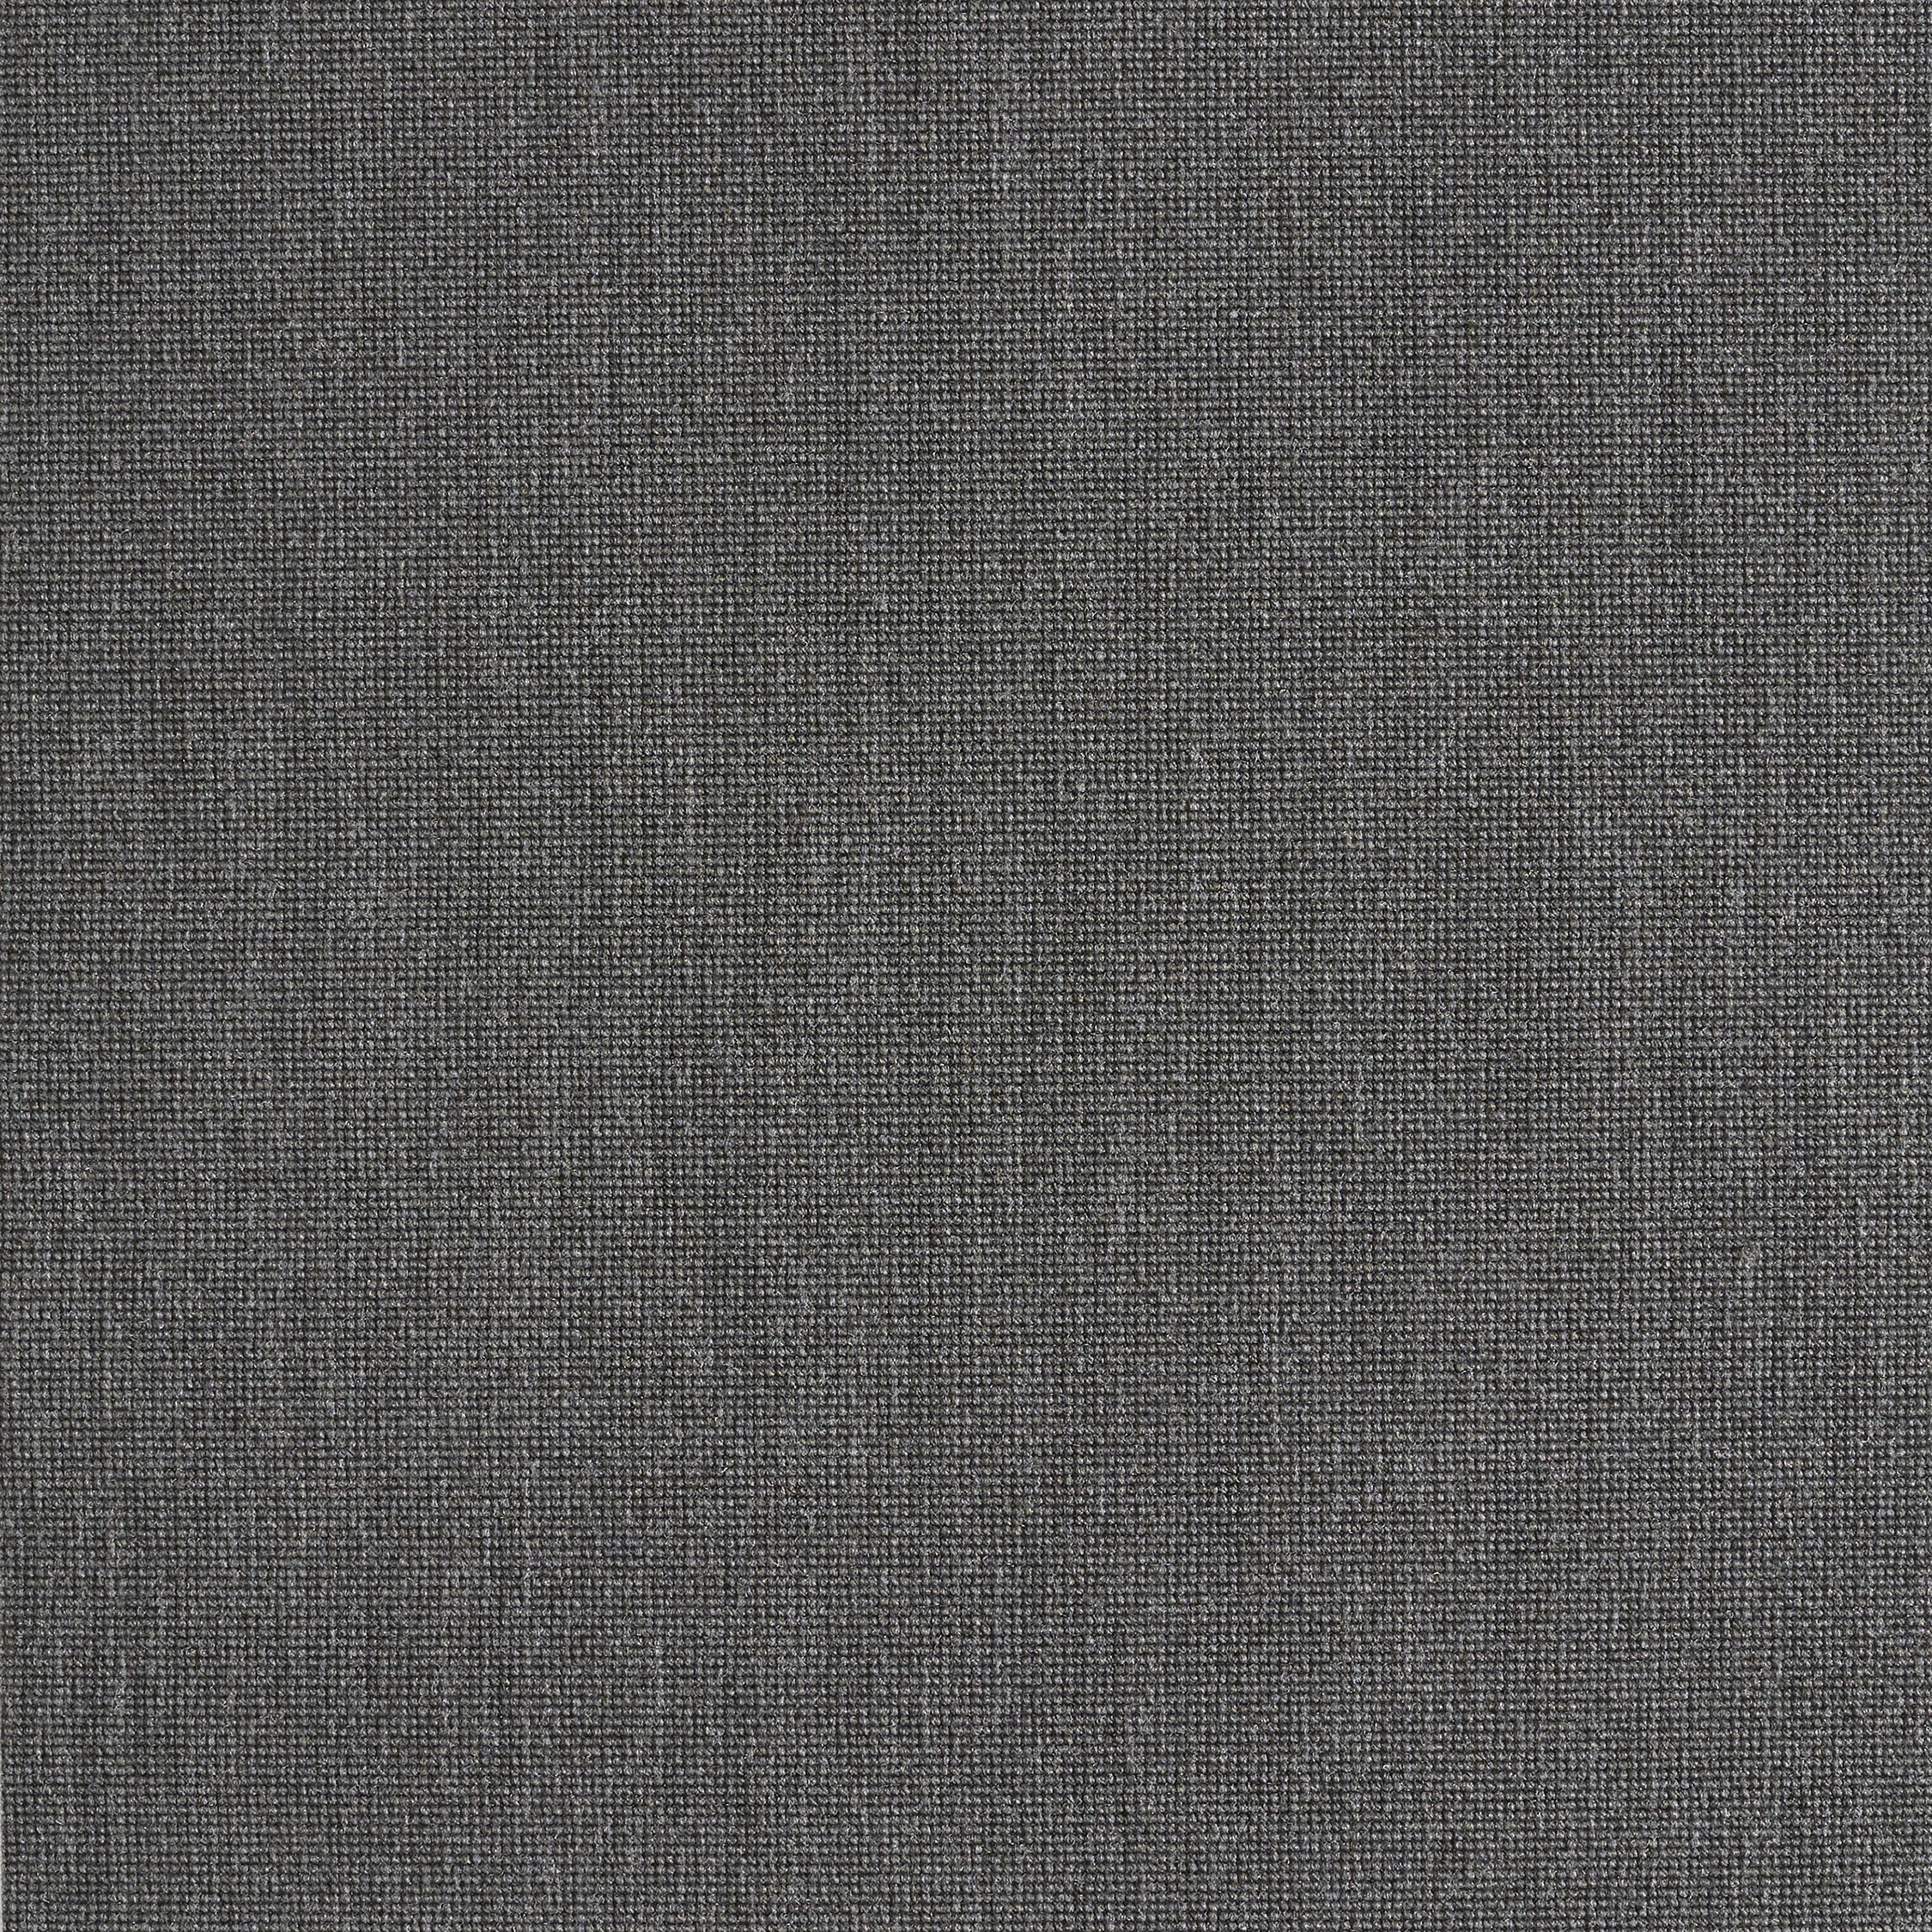 Eco Profile grey